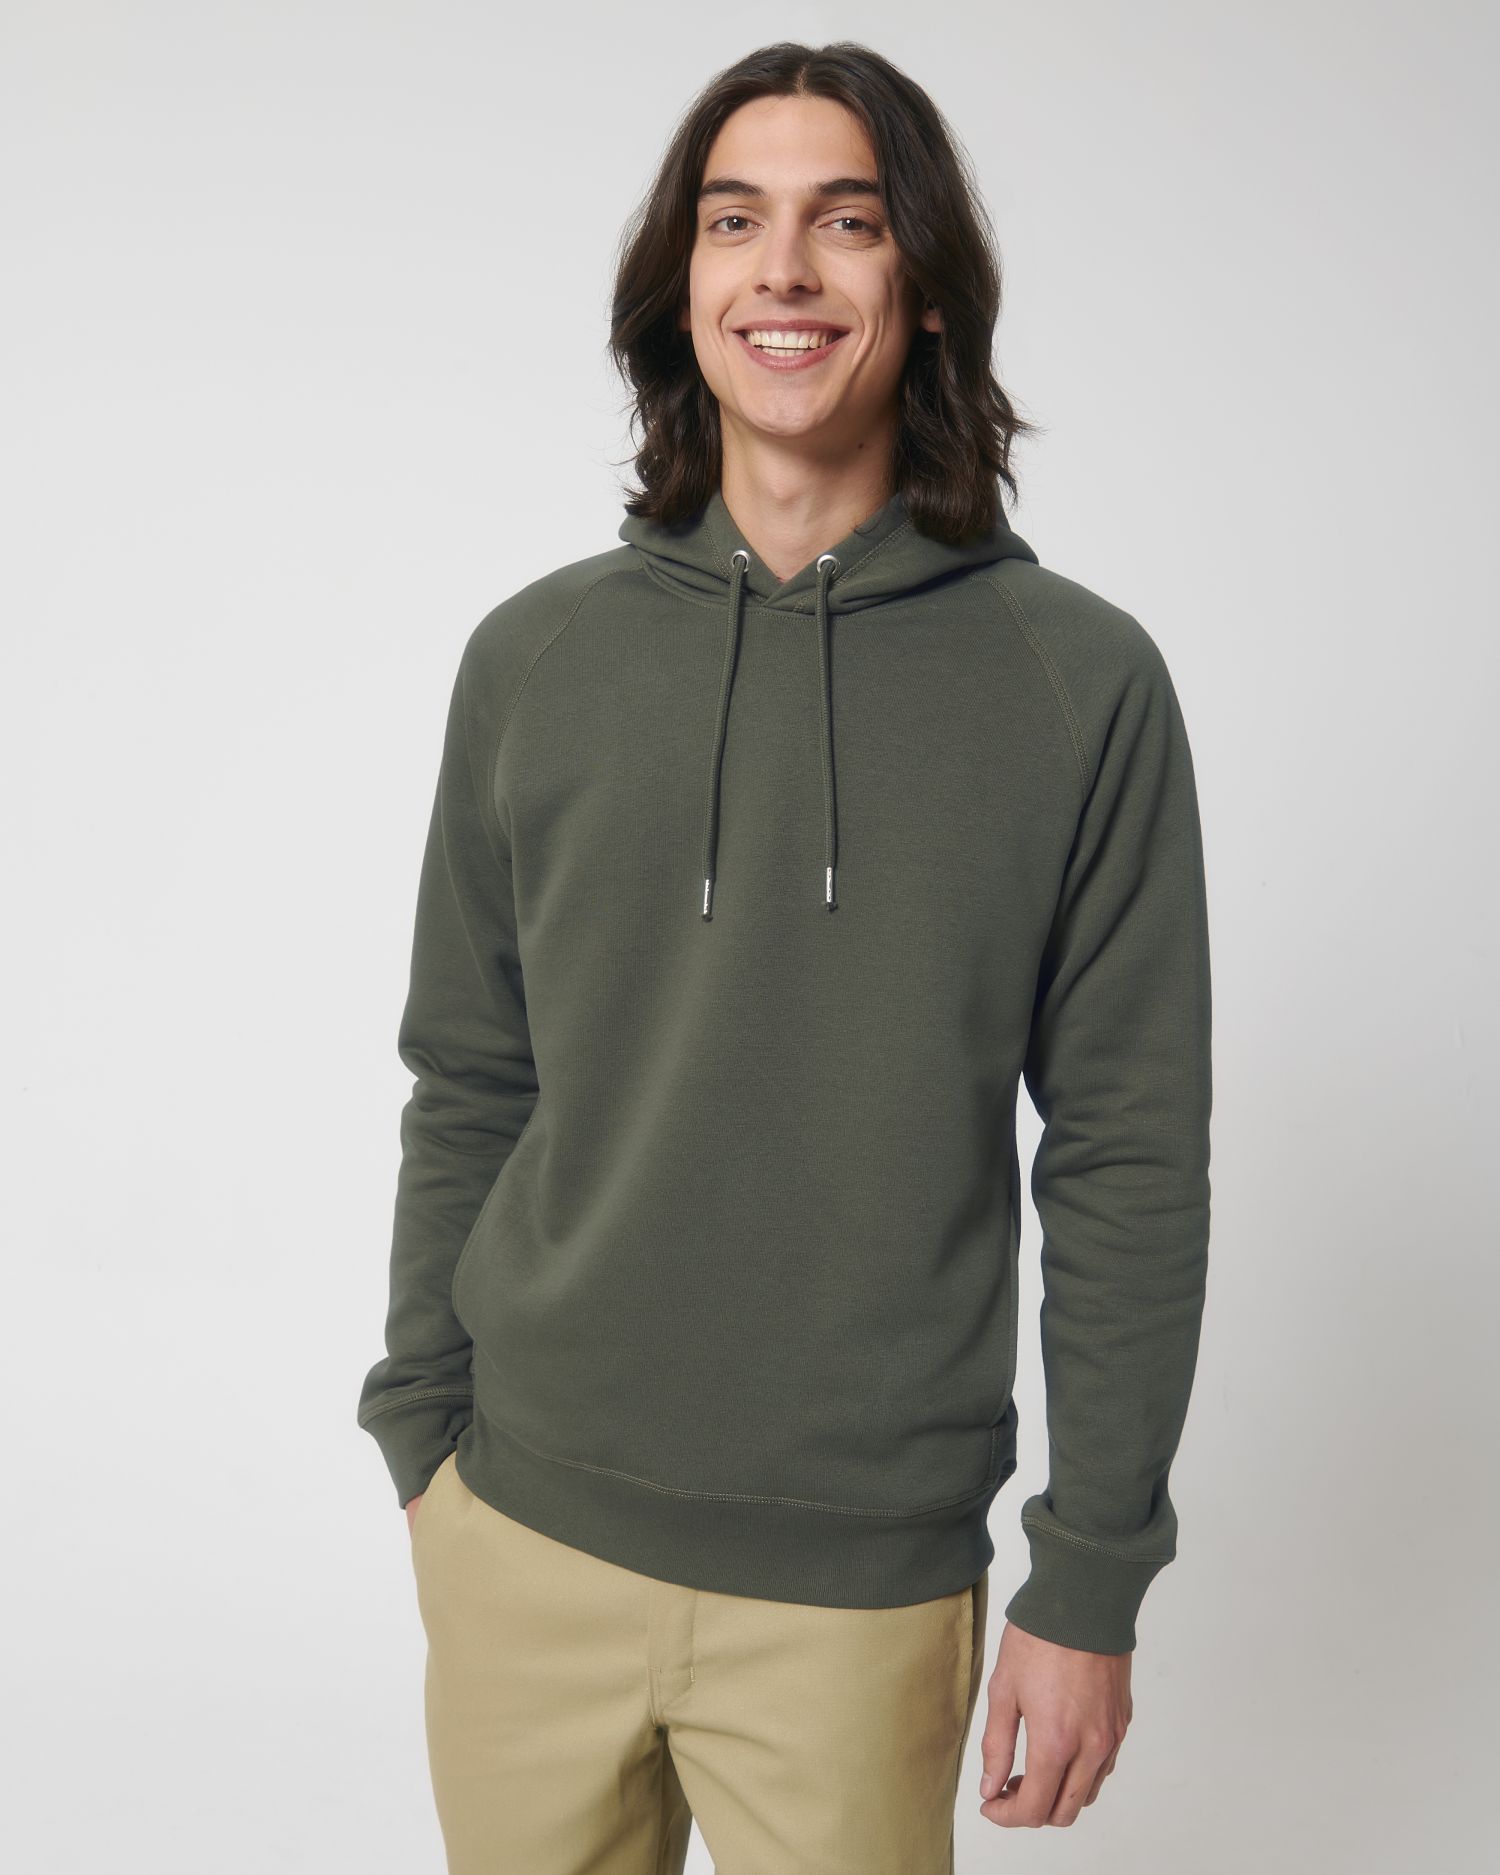 Sider - The unisex side pocket hoodie sweatshirt from Stanley/Stella ...